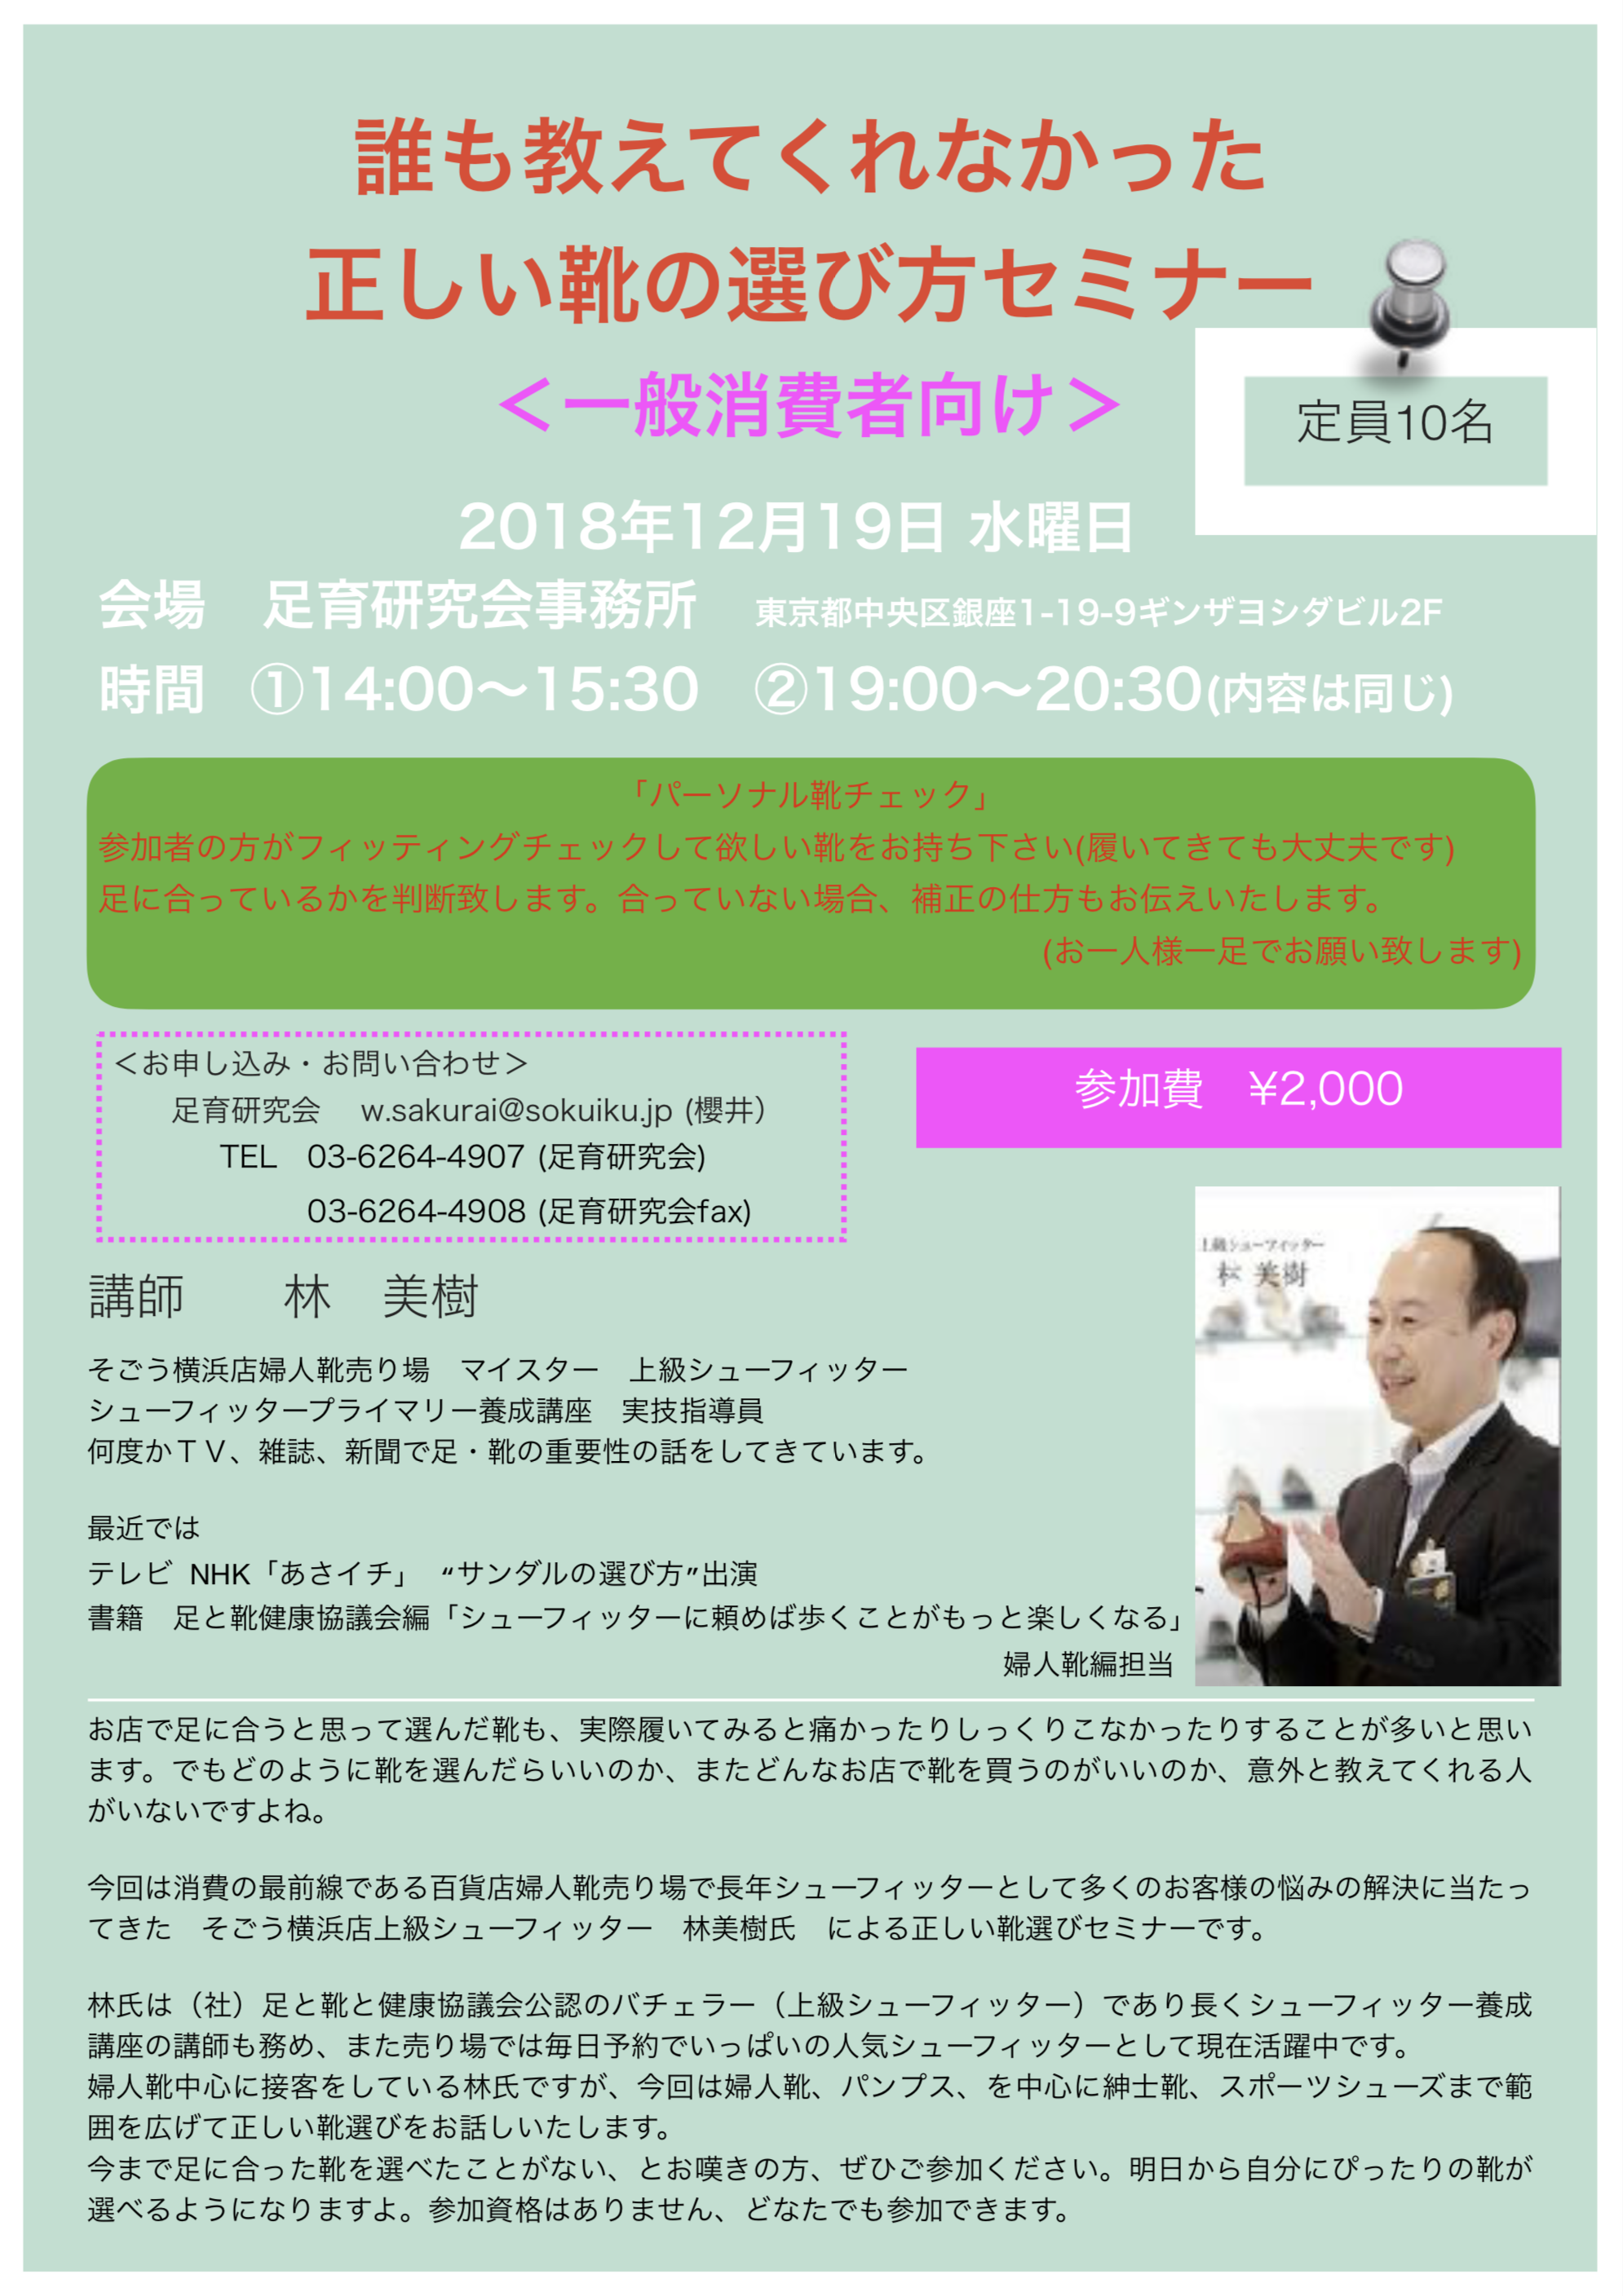 http://www.sokuiku.jp/photo/event20181219_full.png